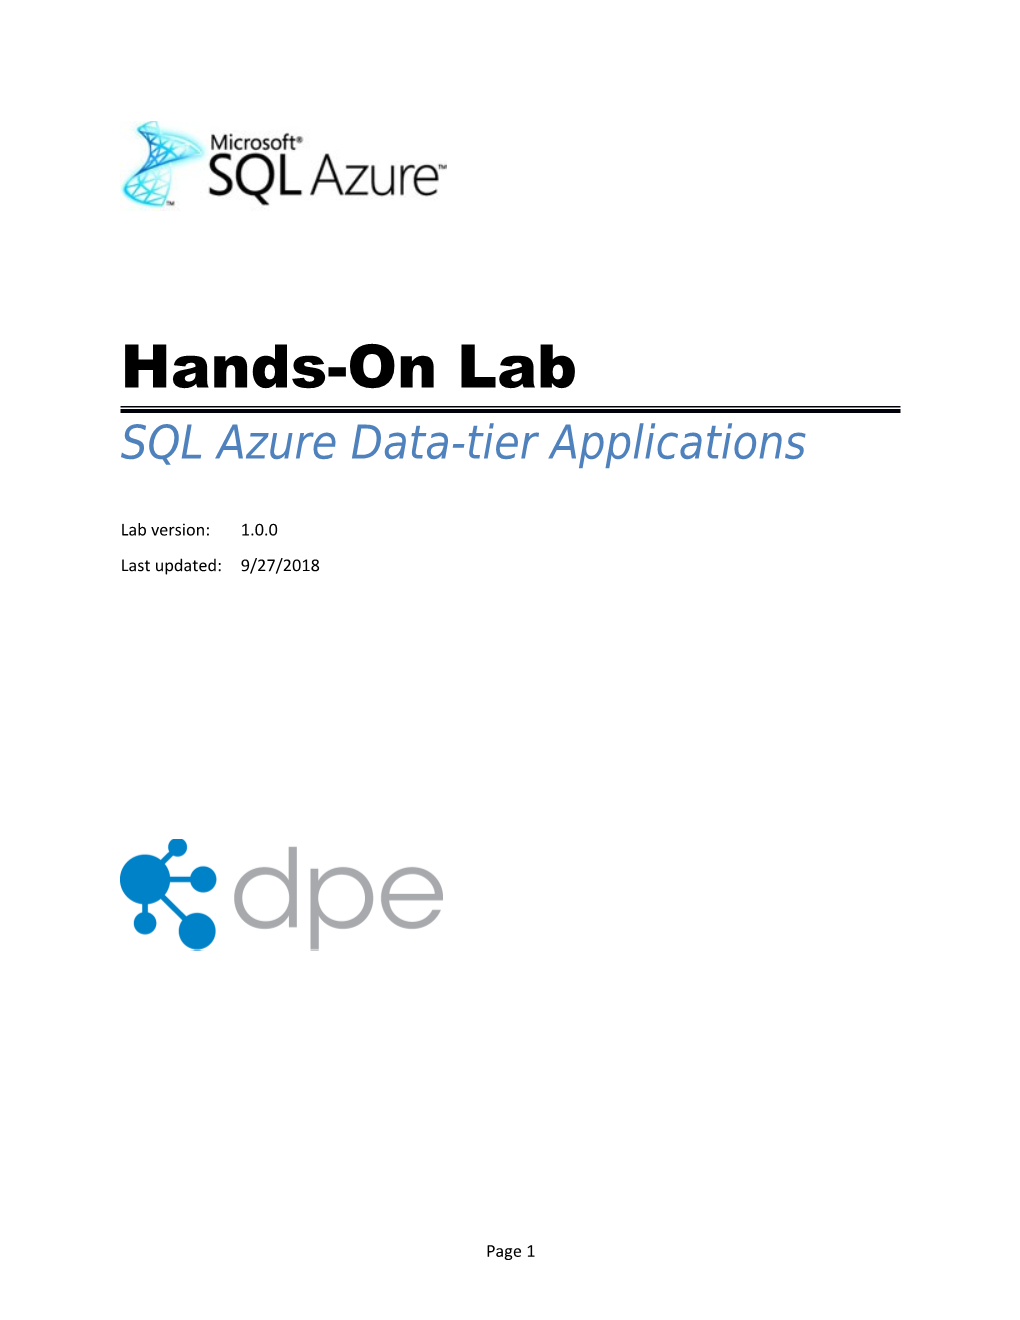 SQL Azure Data-Tier Applications